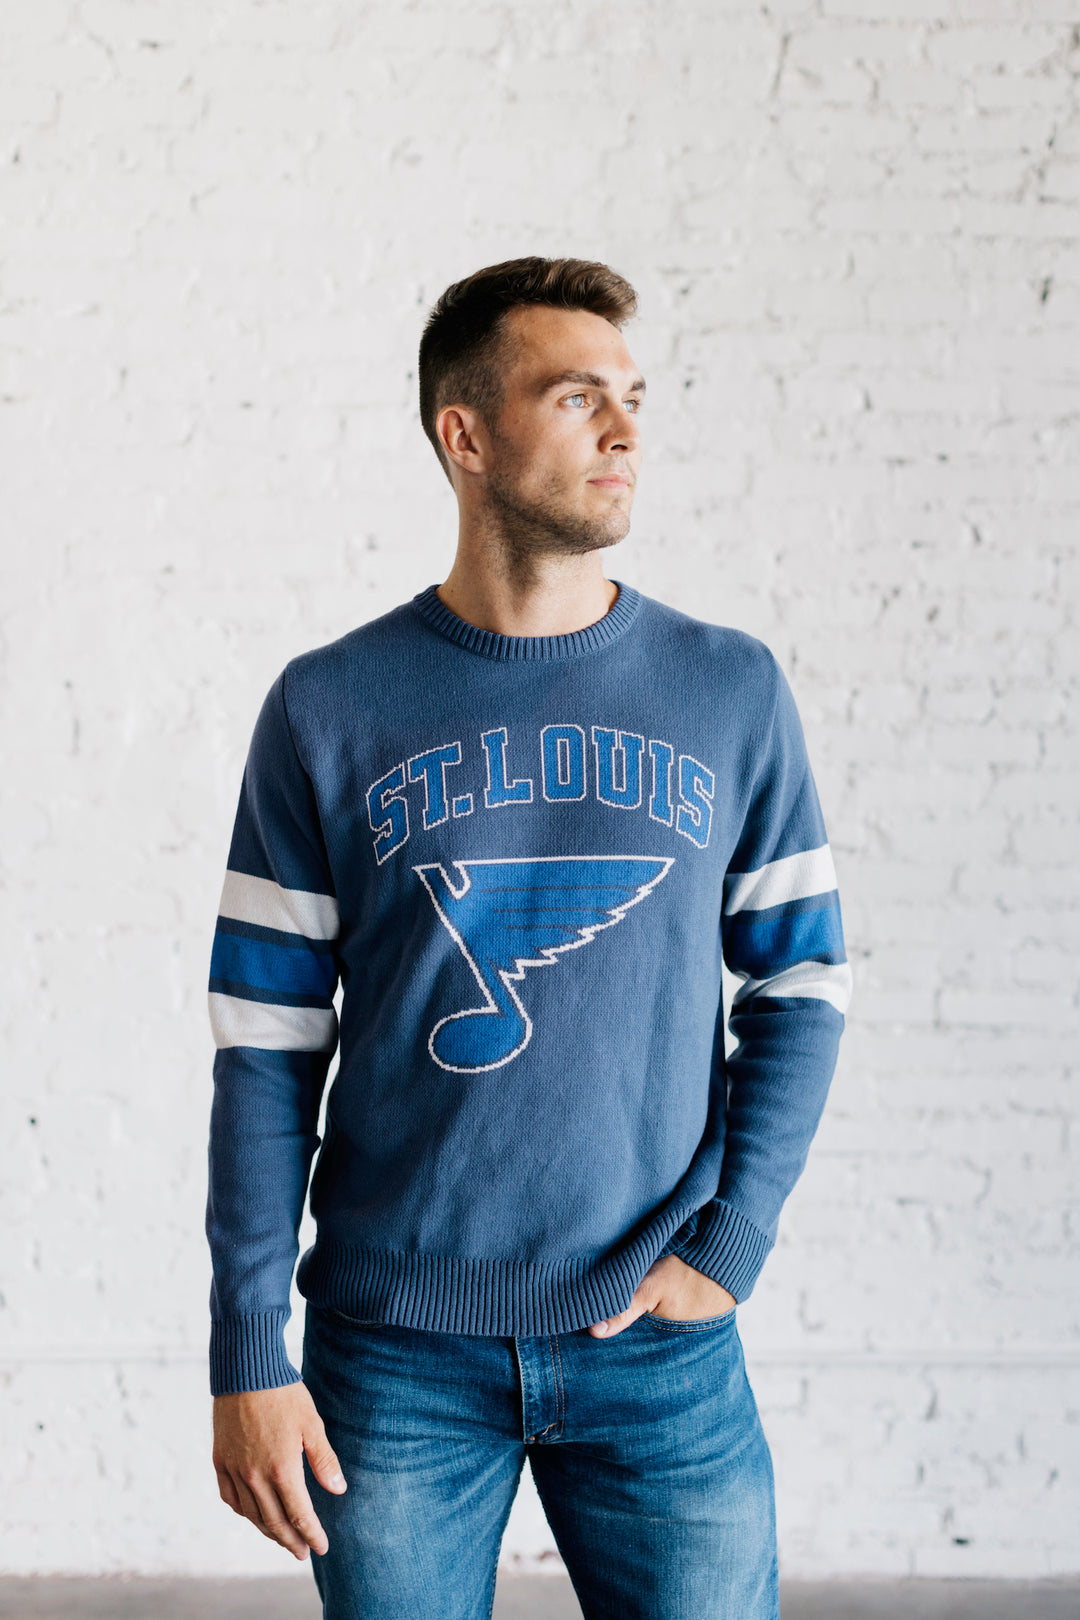 Female St Louis Blues Sweatshirts in St Louis Blues Team Shop